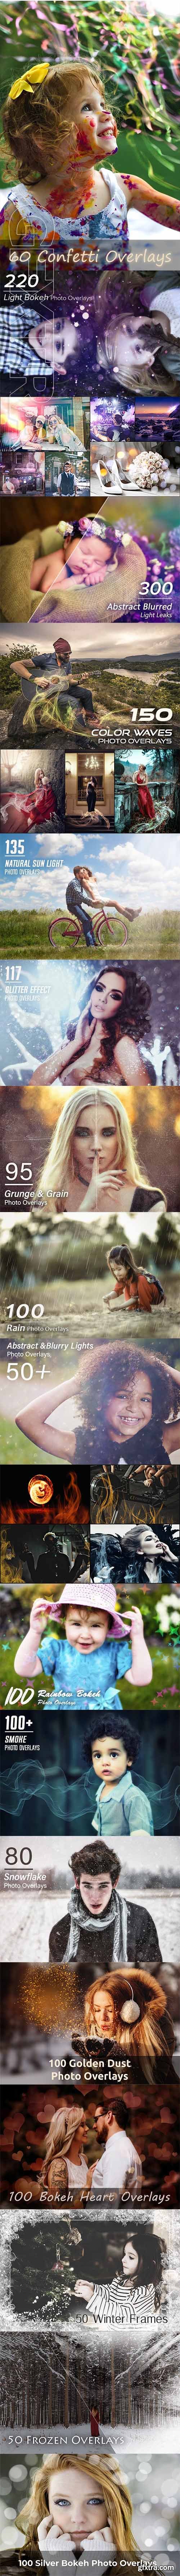 ID - 5000 Realistic Photo Overlays